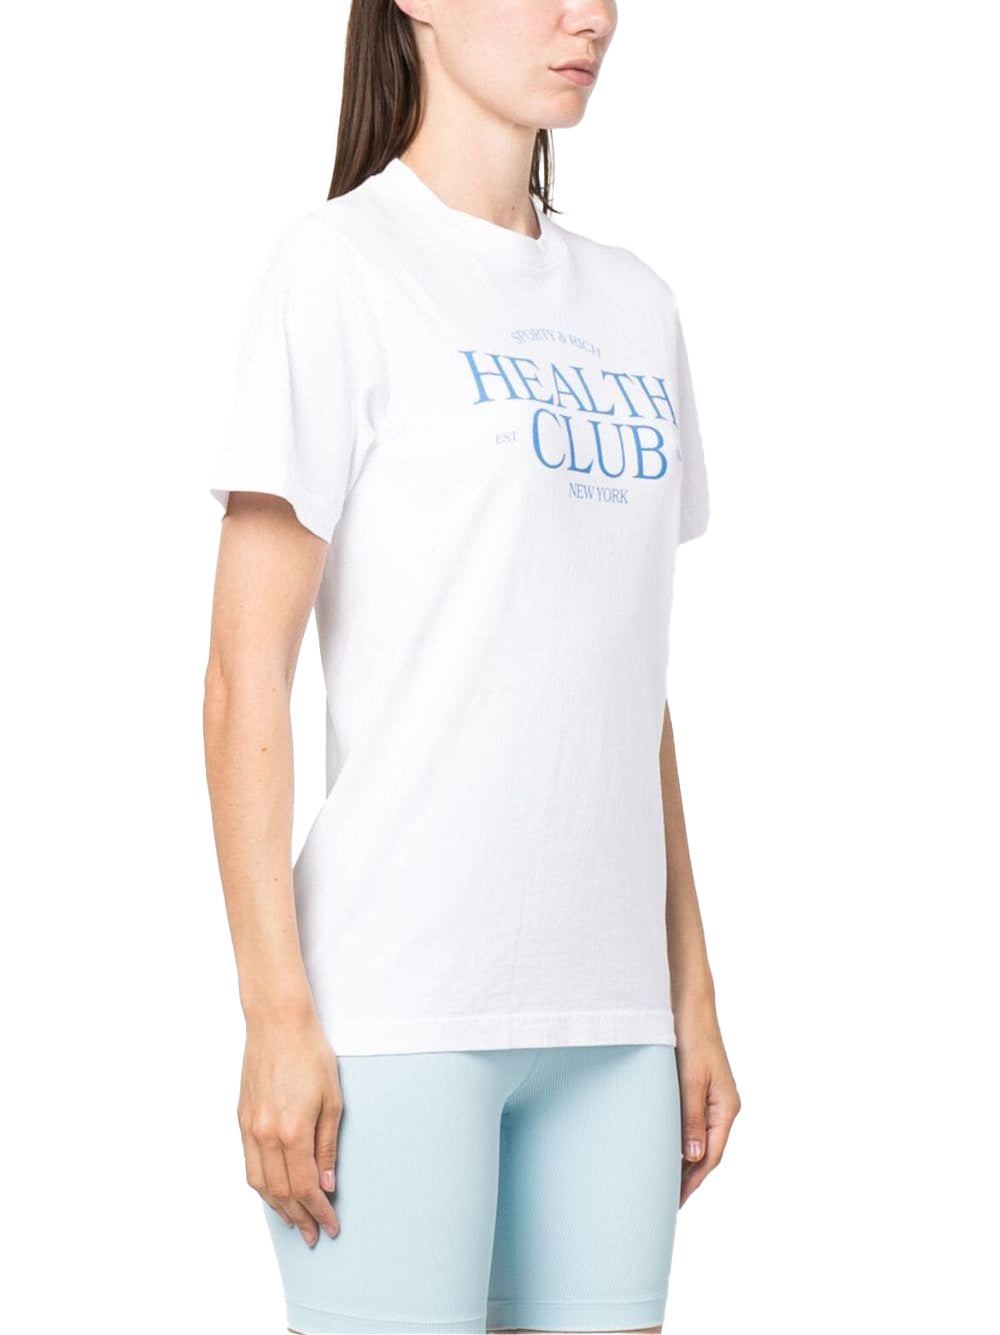 SR Health Club T-shirt